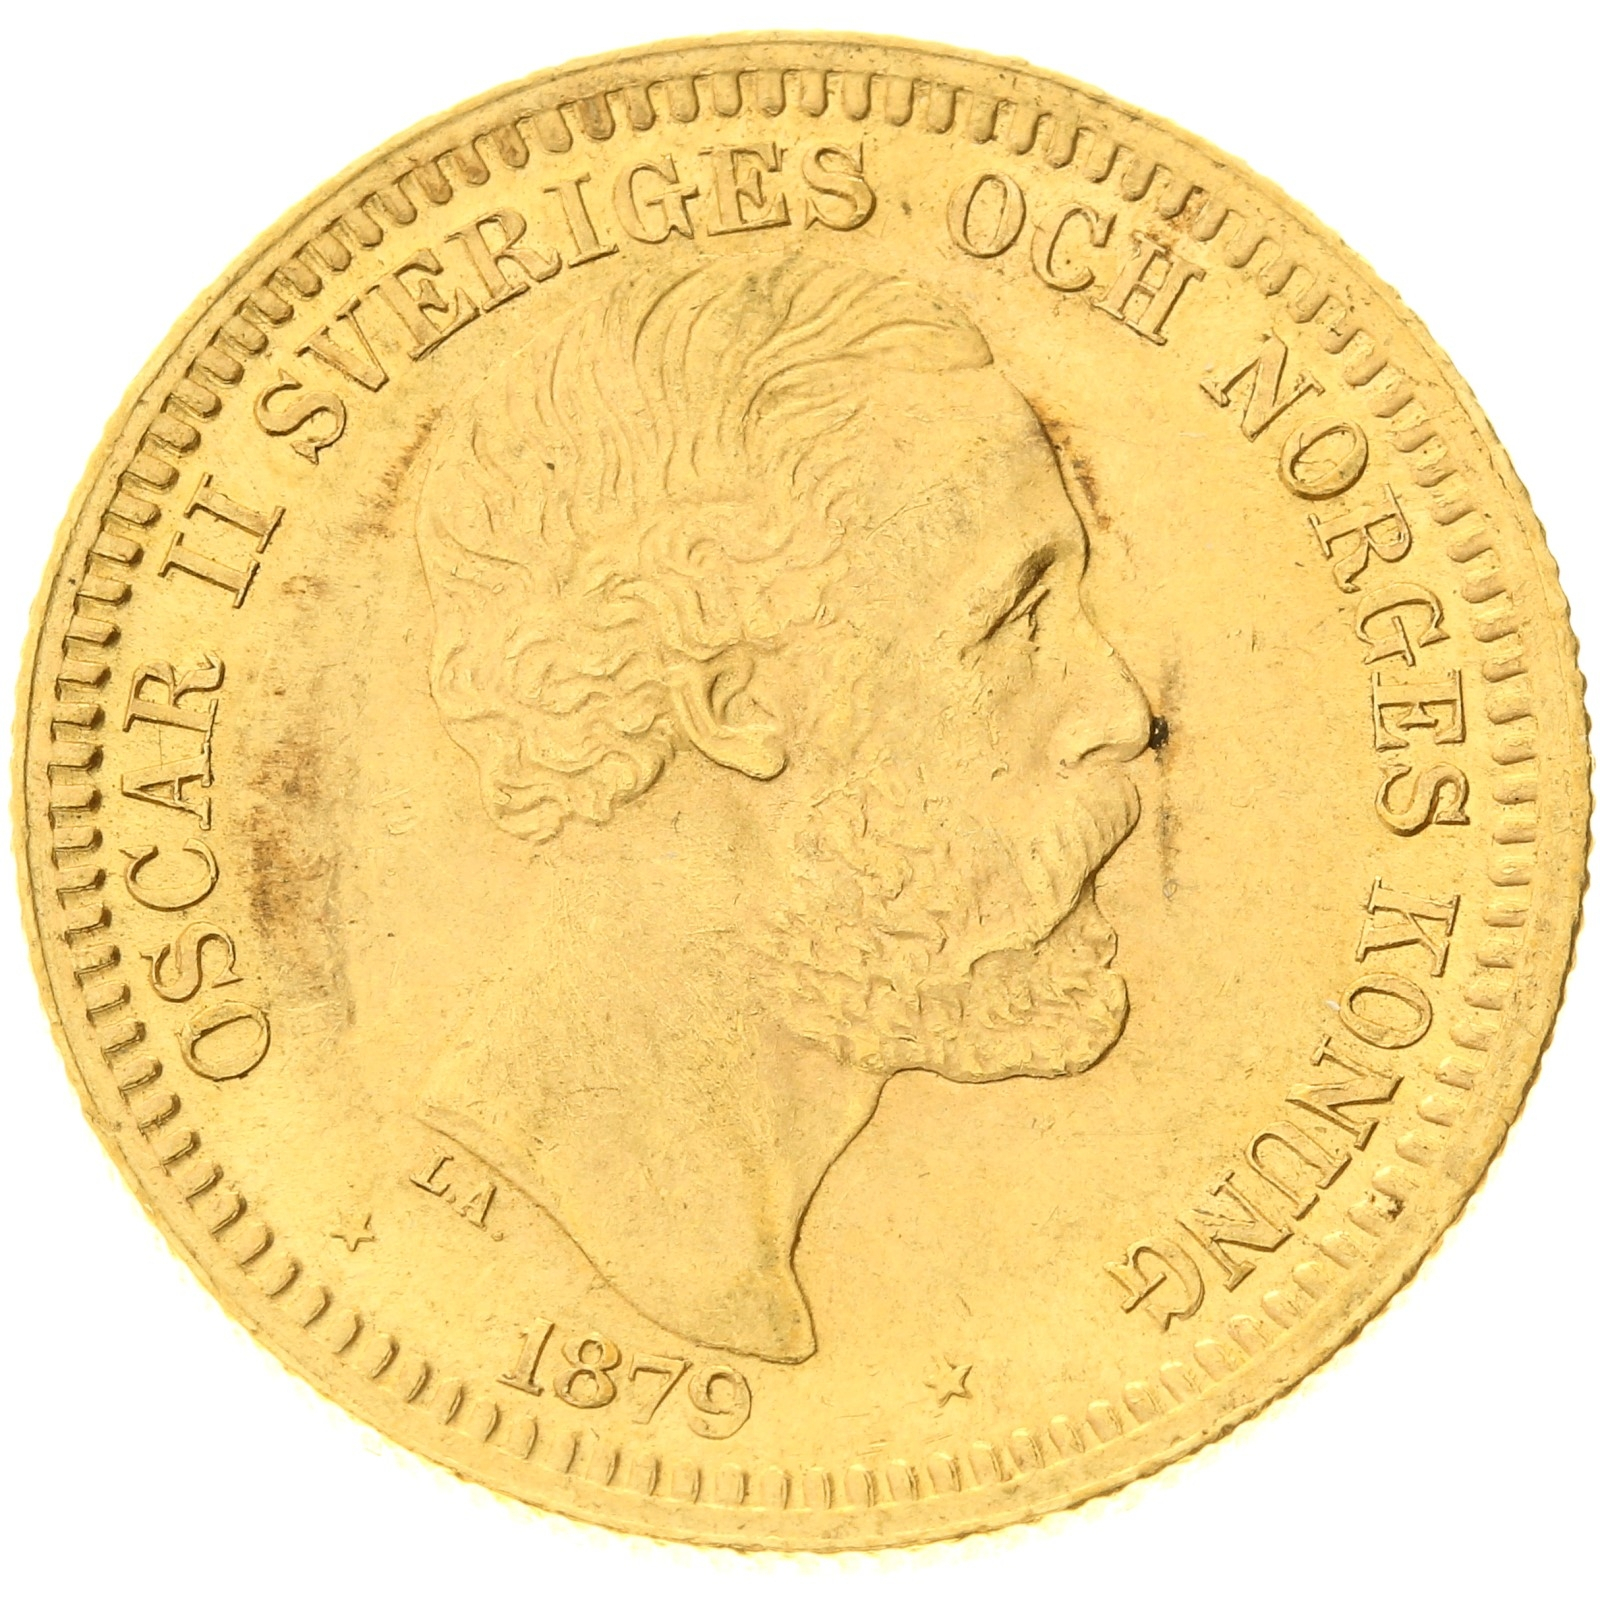 Sweden - 20 kronor - 1879 - Oscar II 